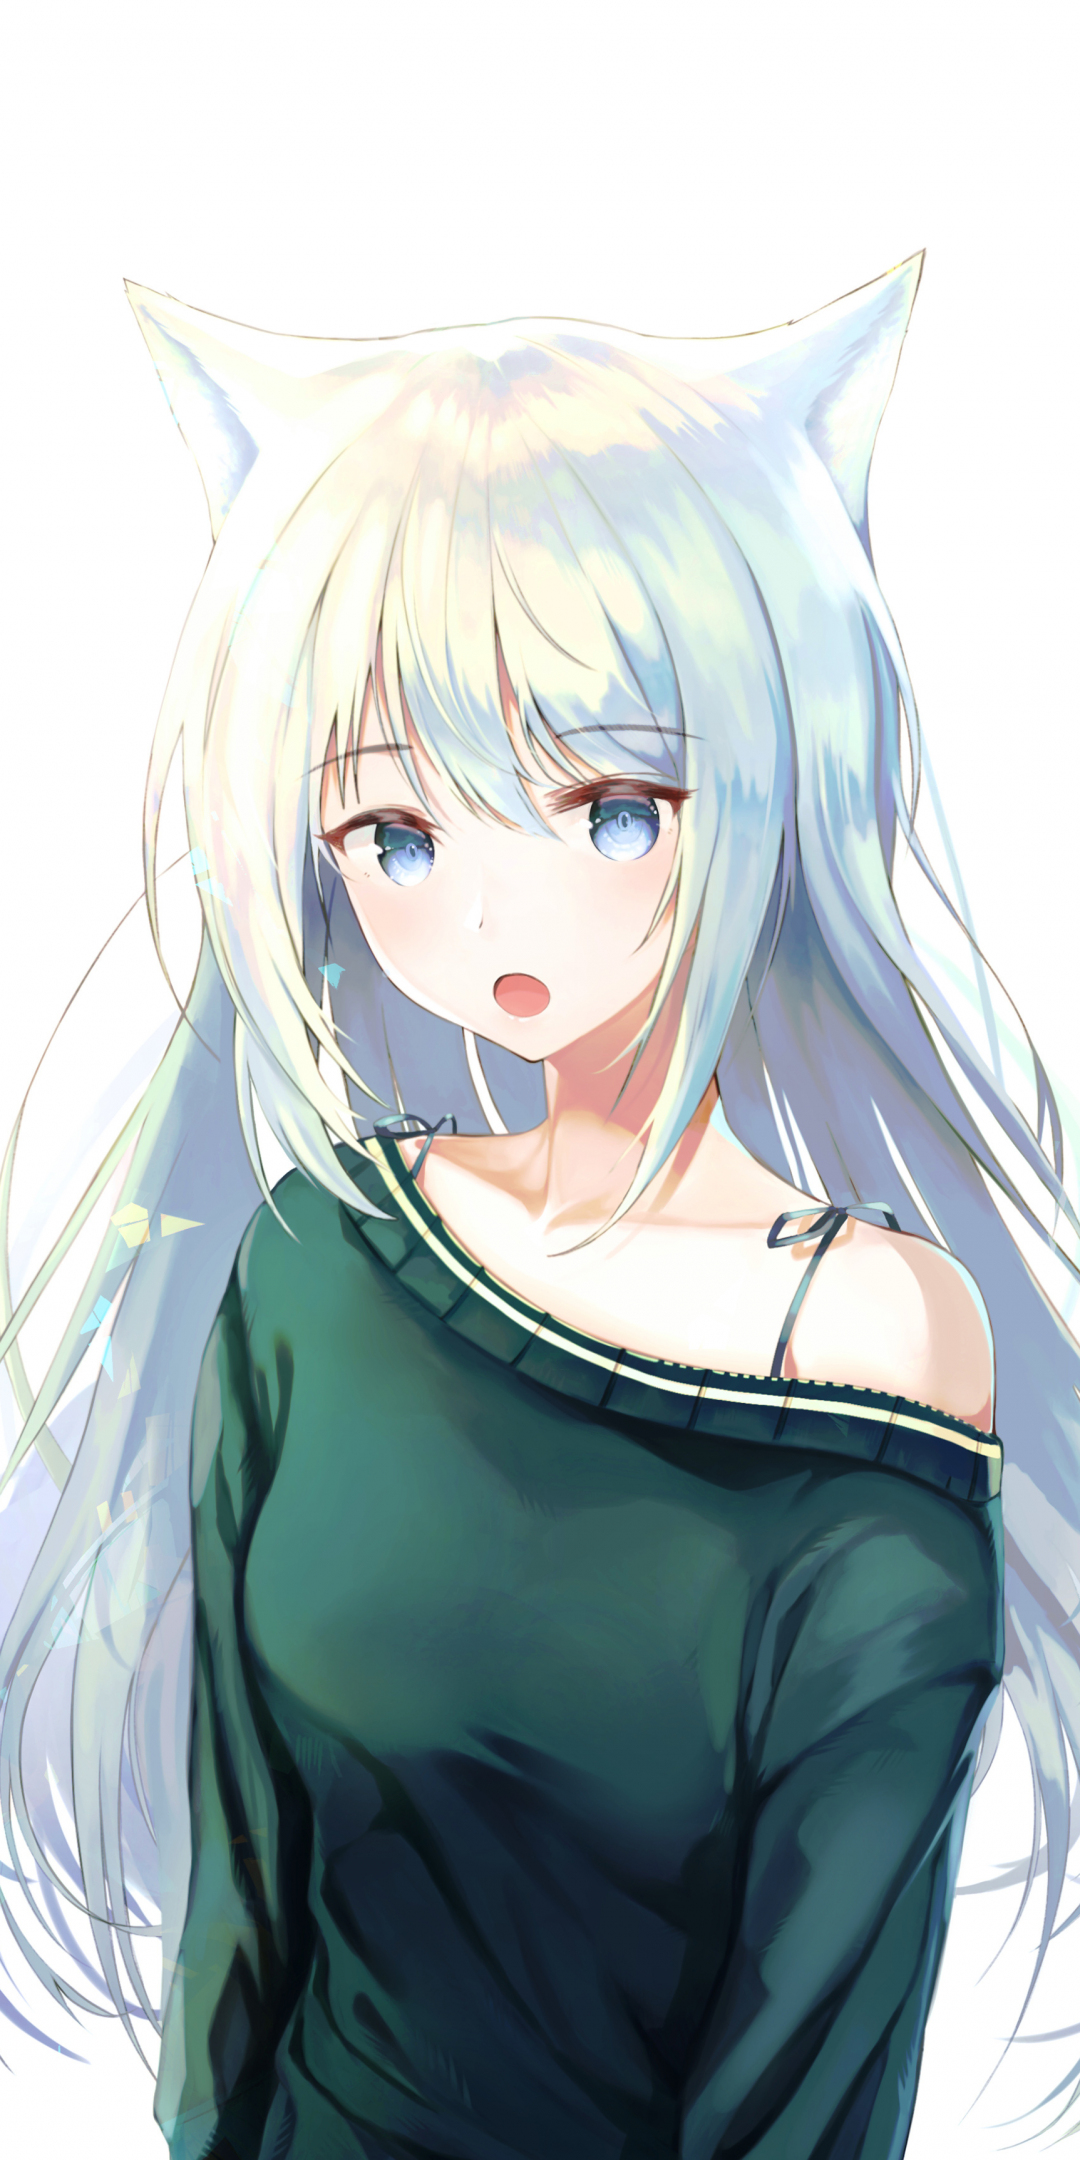 White hair, curious, hangover, anime girl, blue eyes, 1080x2160 wallpaper